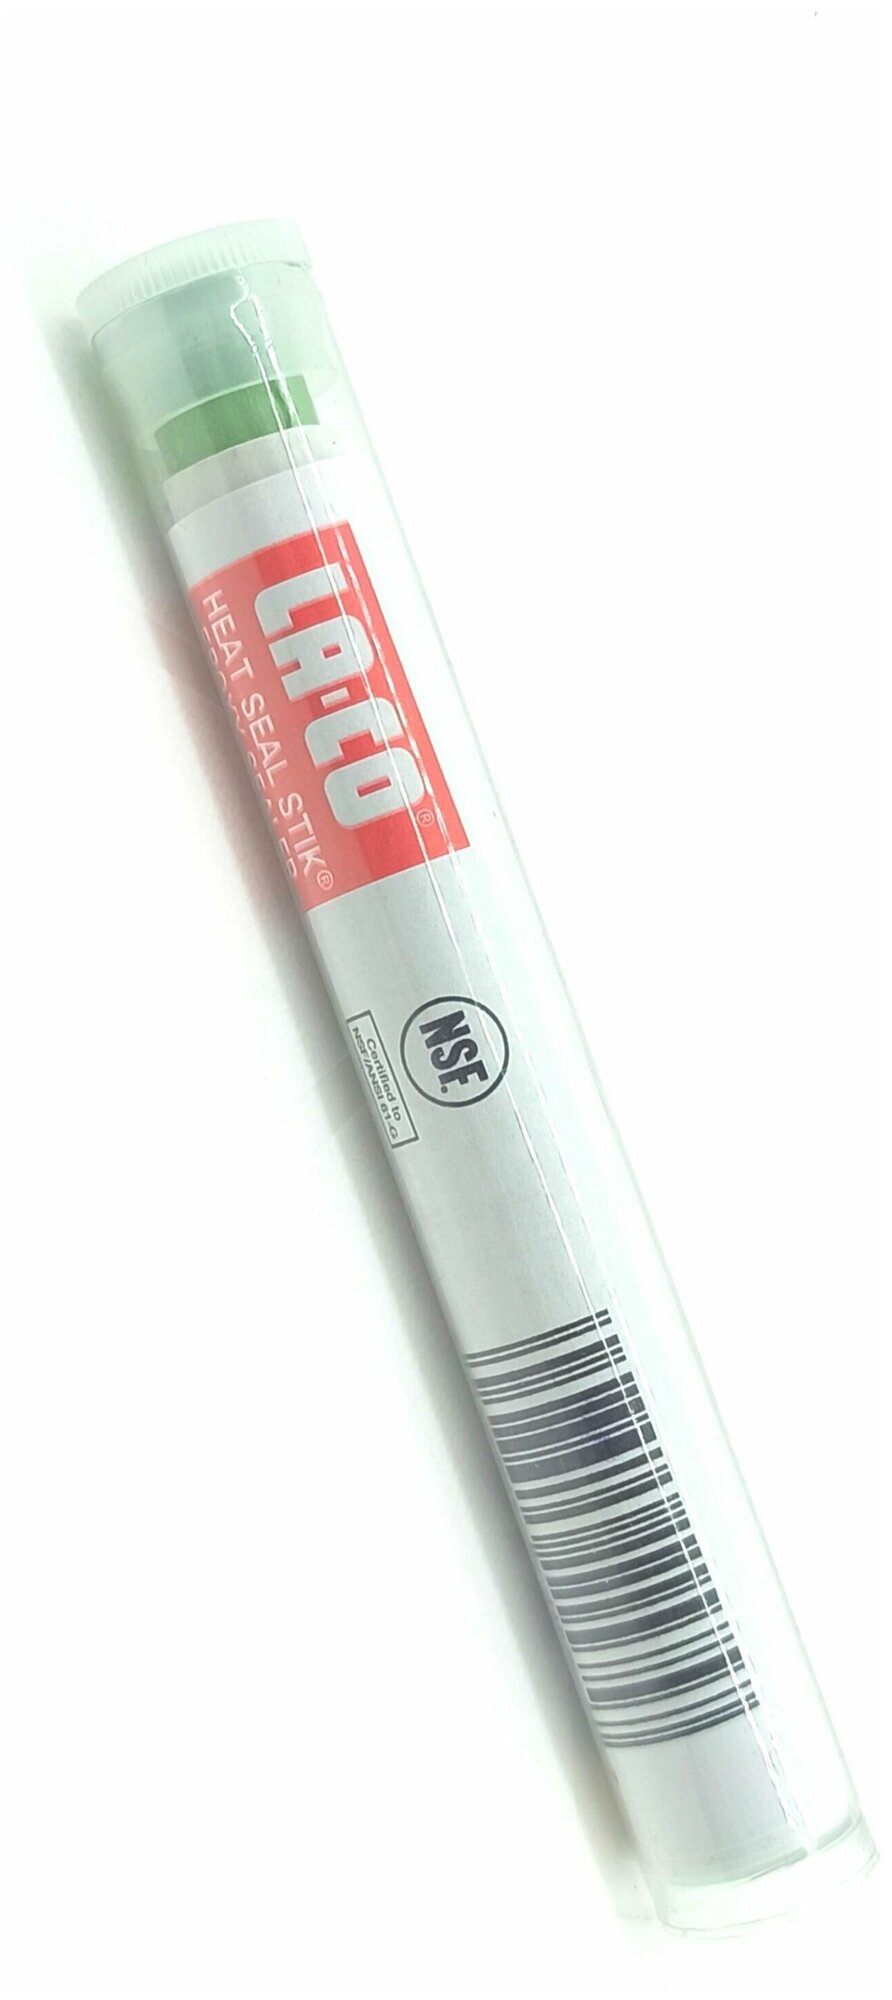 Герметизирующий карандаш для устранения утечек хладагента LA-CO